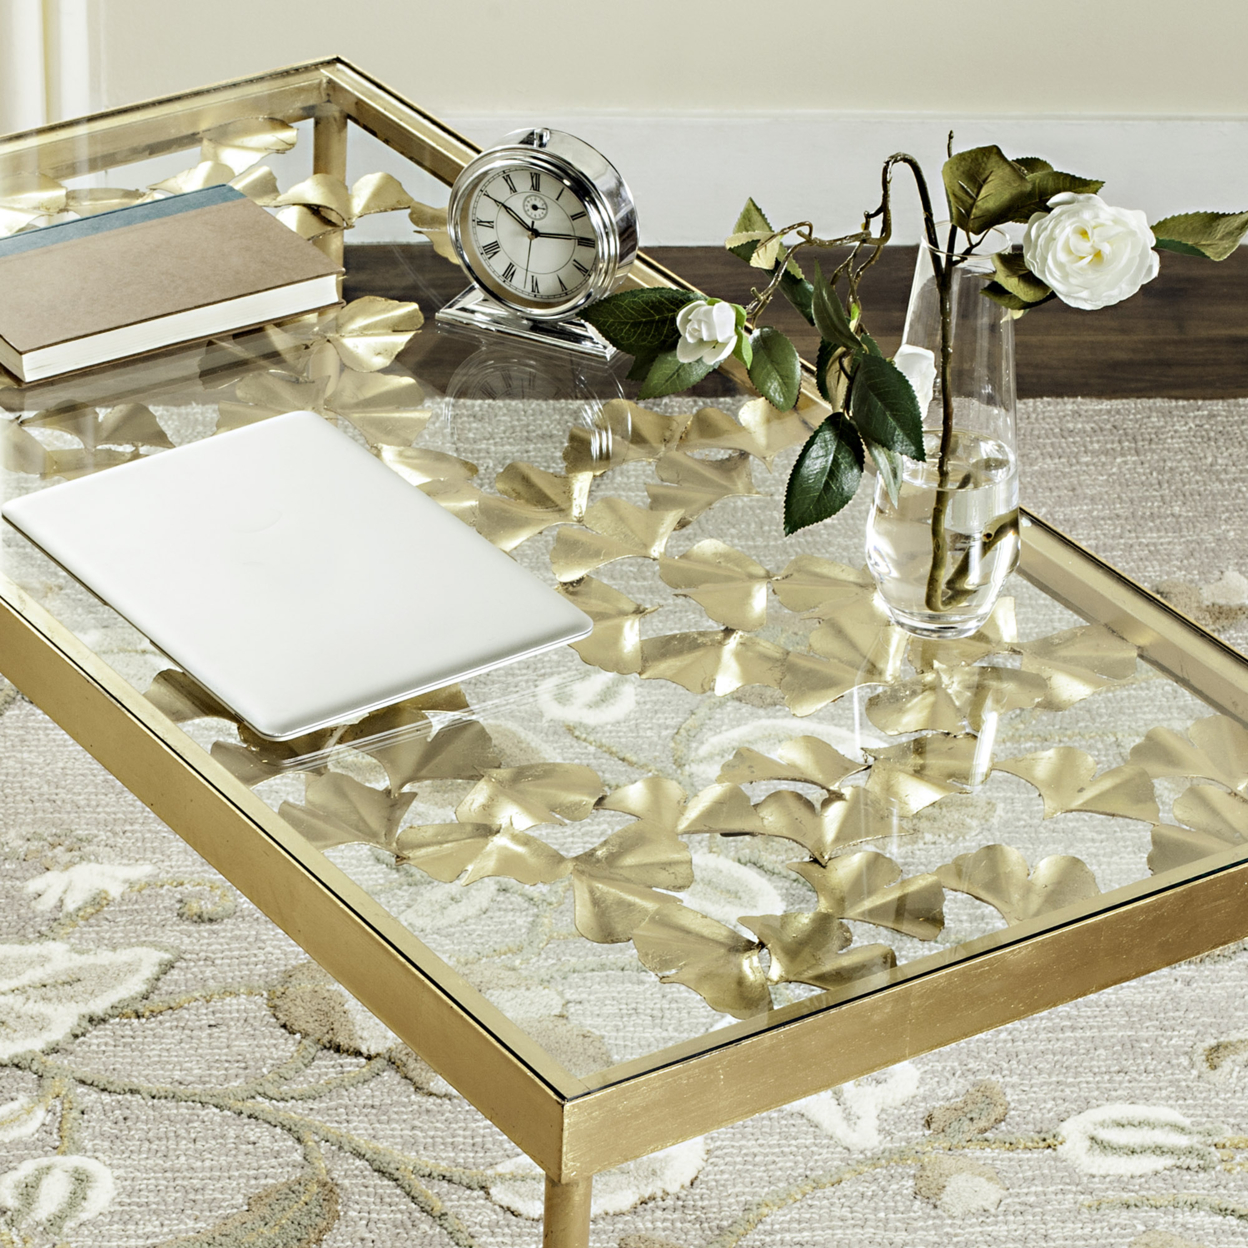 SAFAVIEH Otto Ginkgo Leaf Desk Gold / Clear